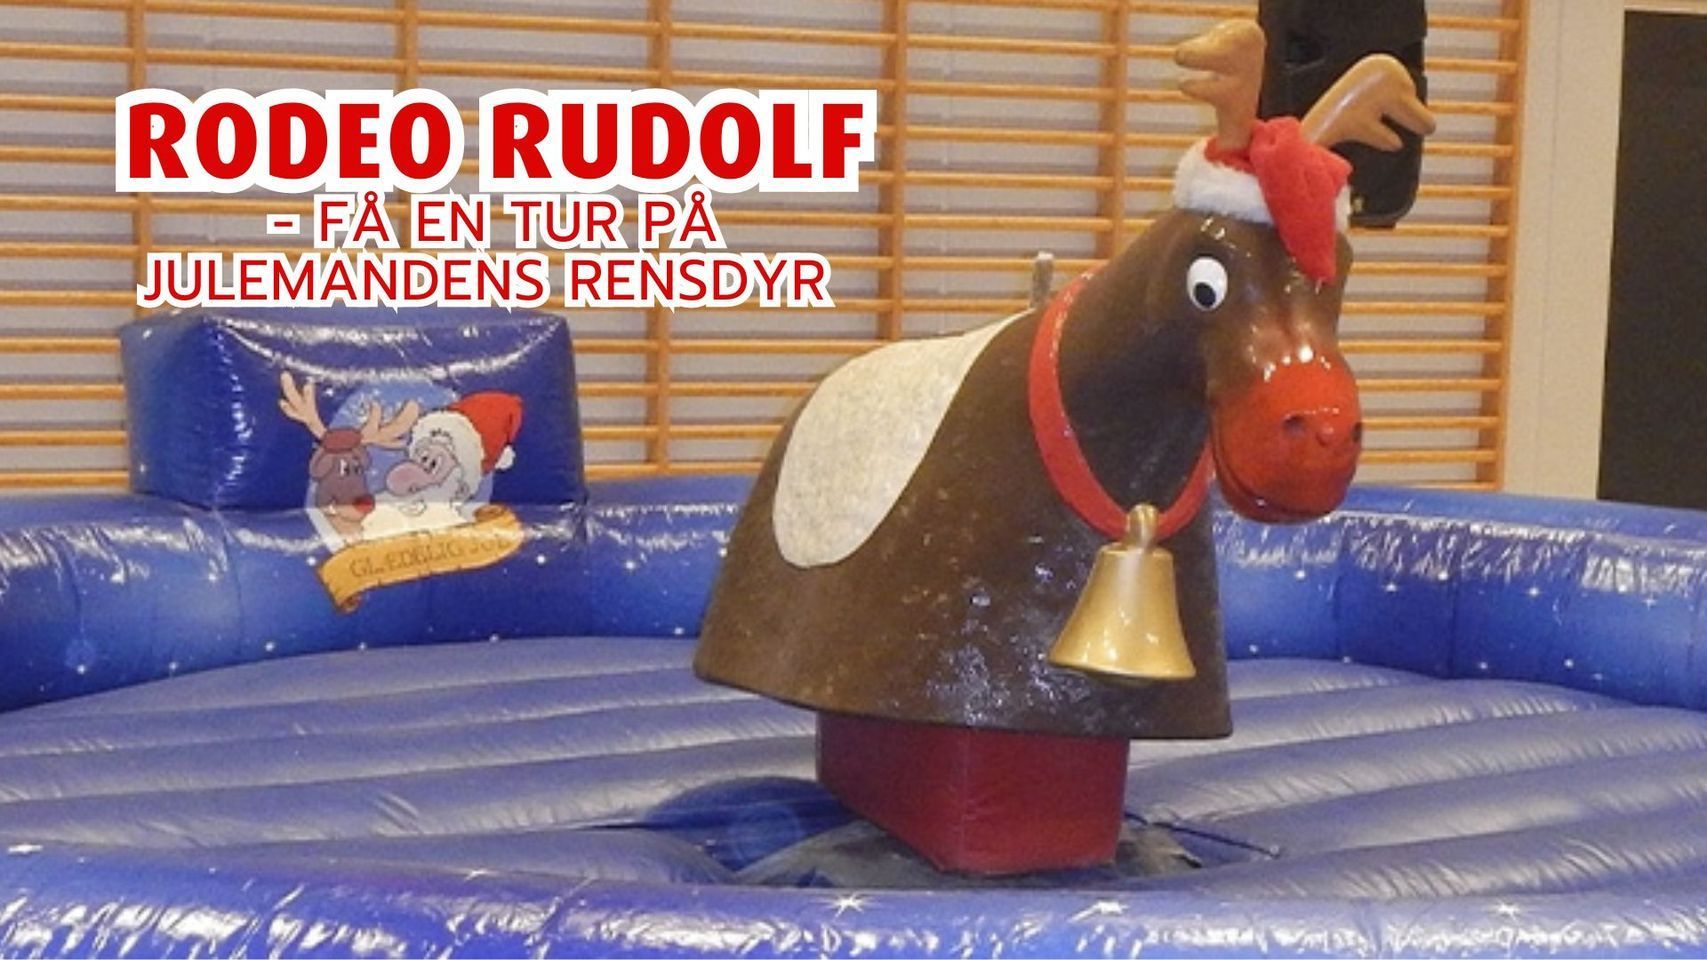 Rodeo Rudolf